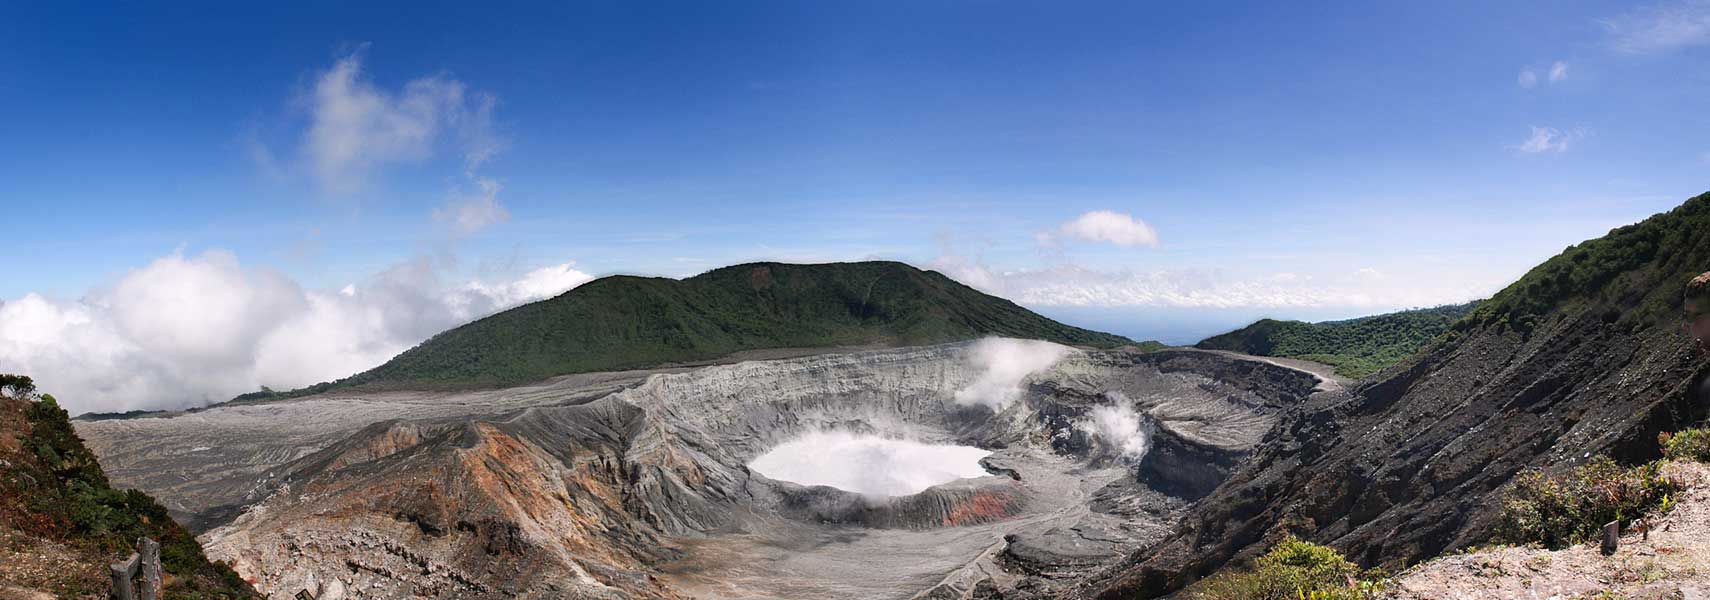 Poás volcano, Central Valley region of Costa Rica